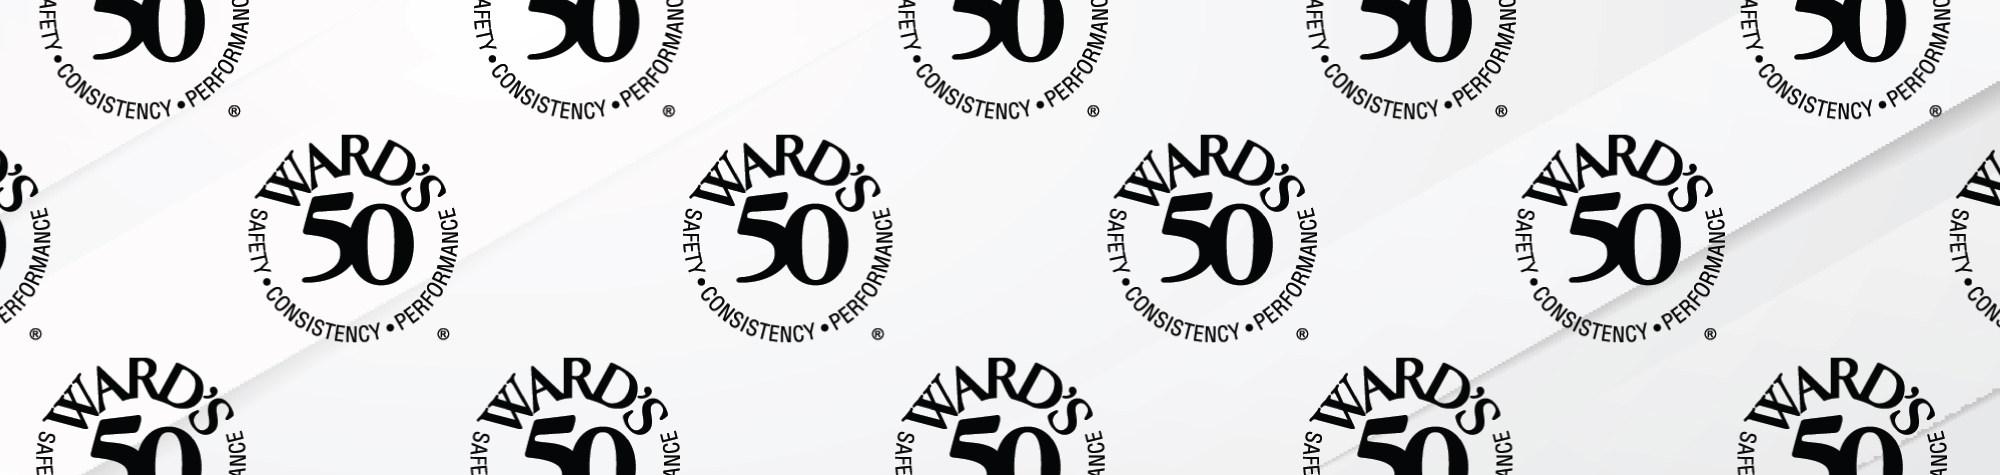 Merchants Insurance Group Receives Ward’s 50® Designation for Third Consecutive Year